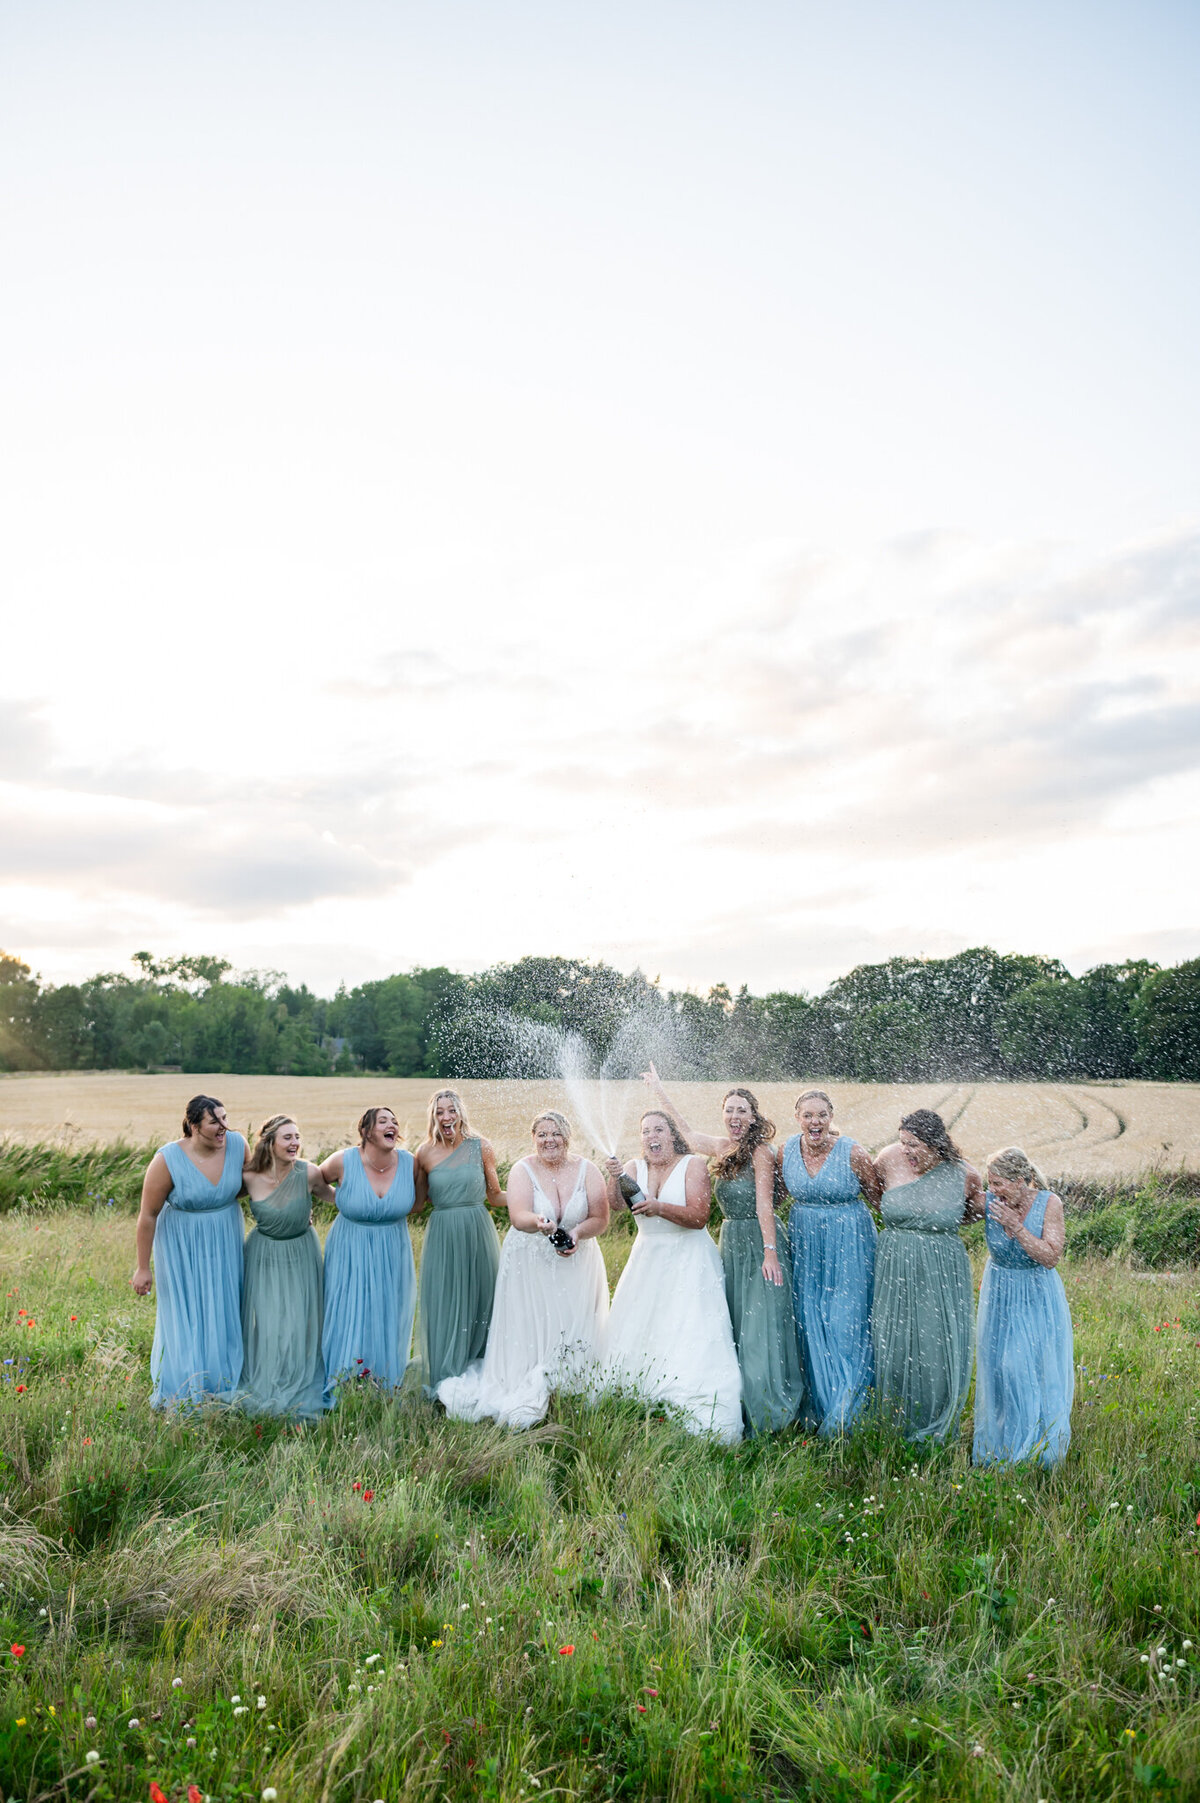 Lapstone Barn Cotswolds Wedding Photographer - Chloe Bolam - S&H - 27.07.23 -89